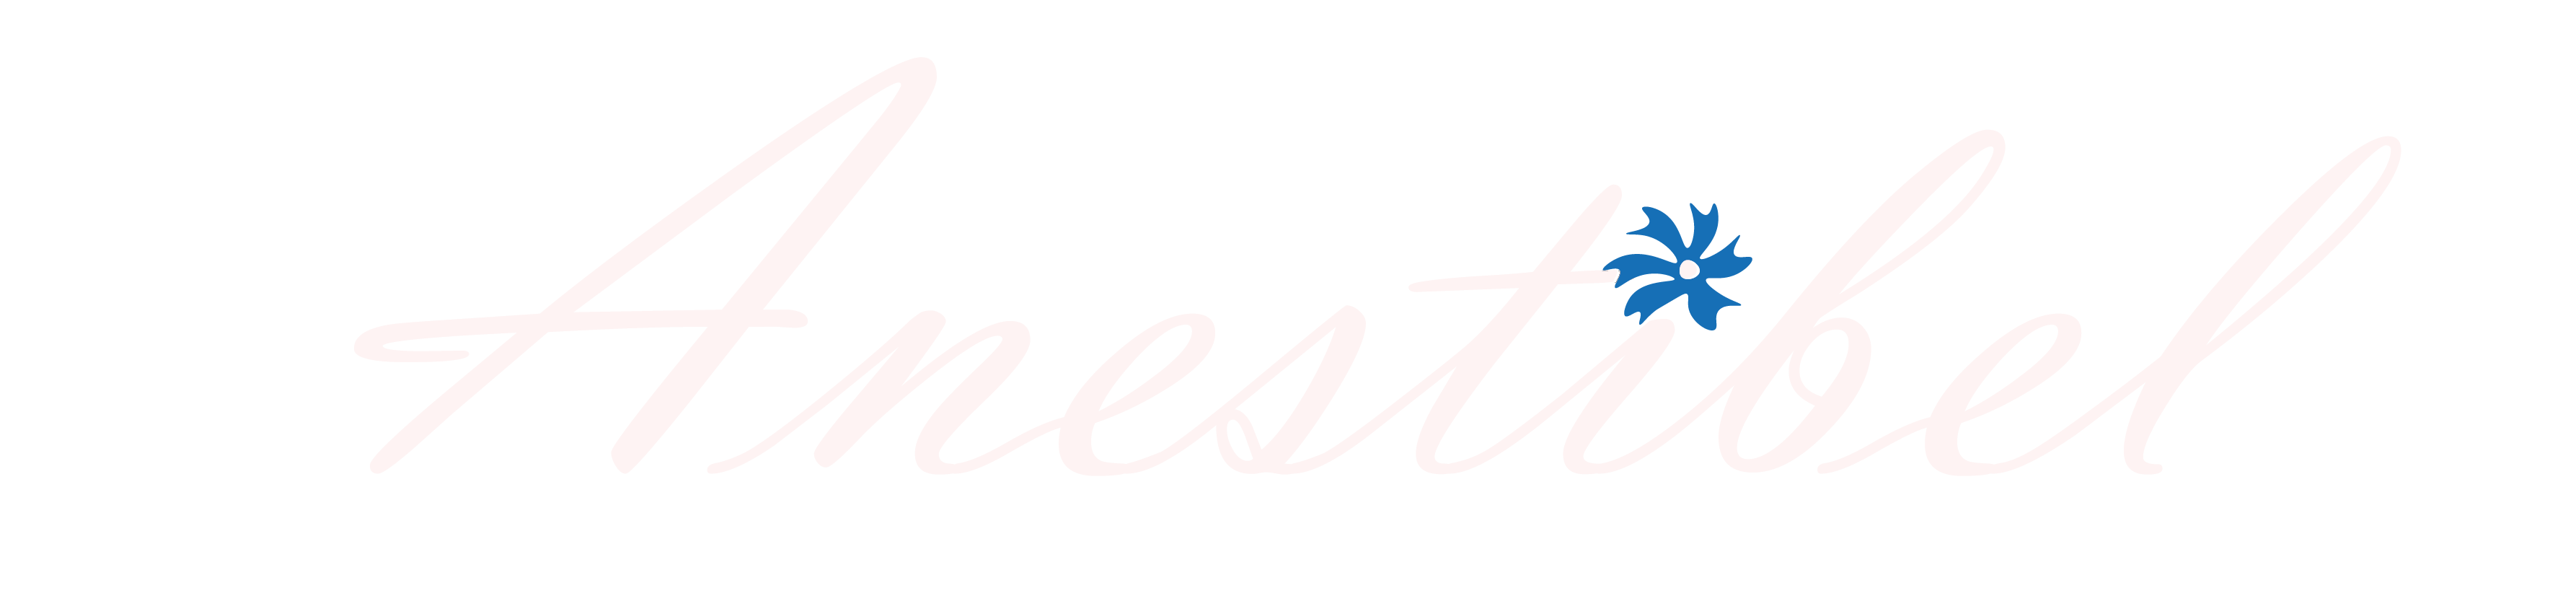 anestibel logo